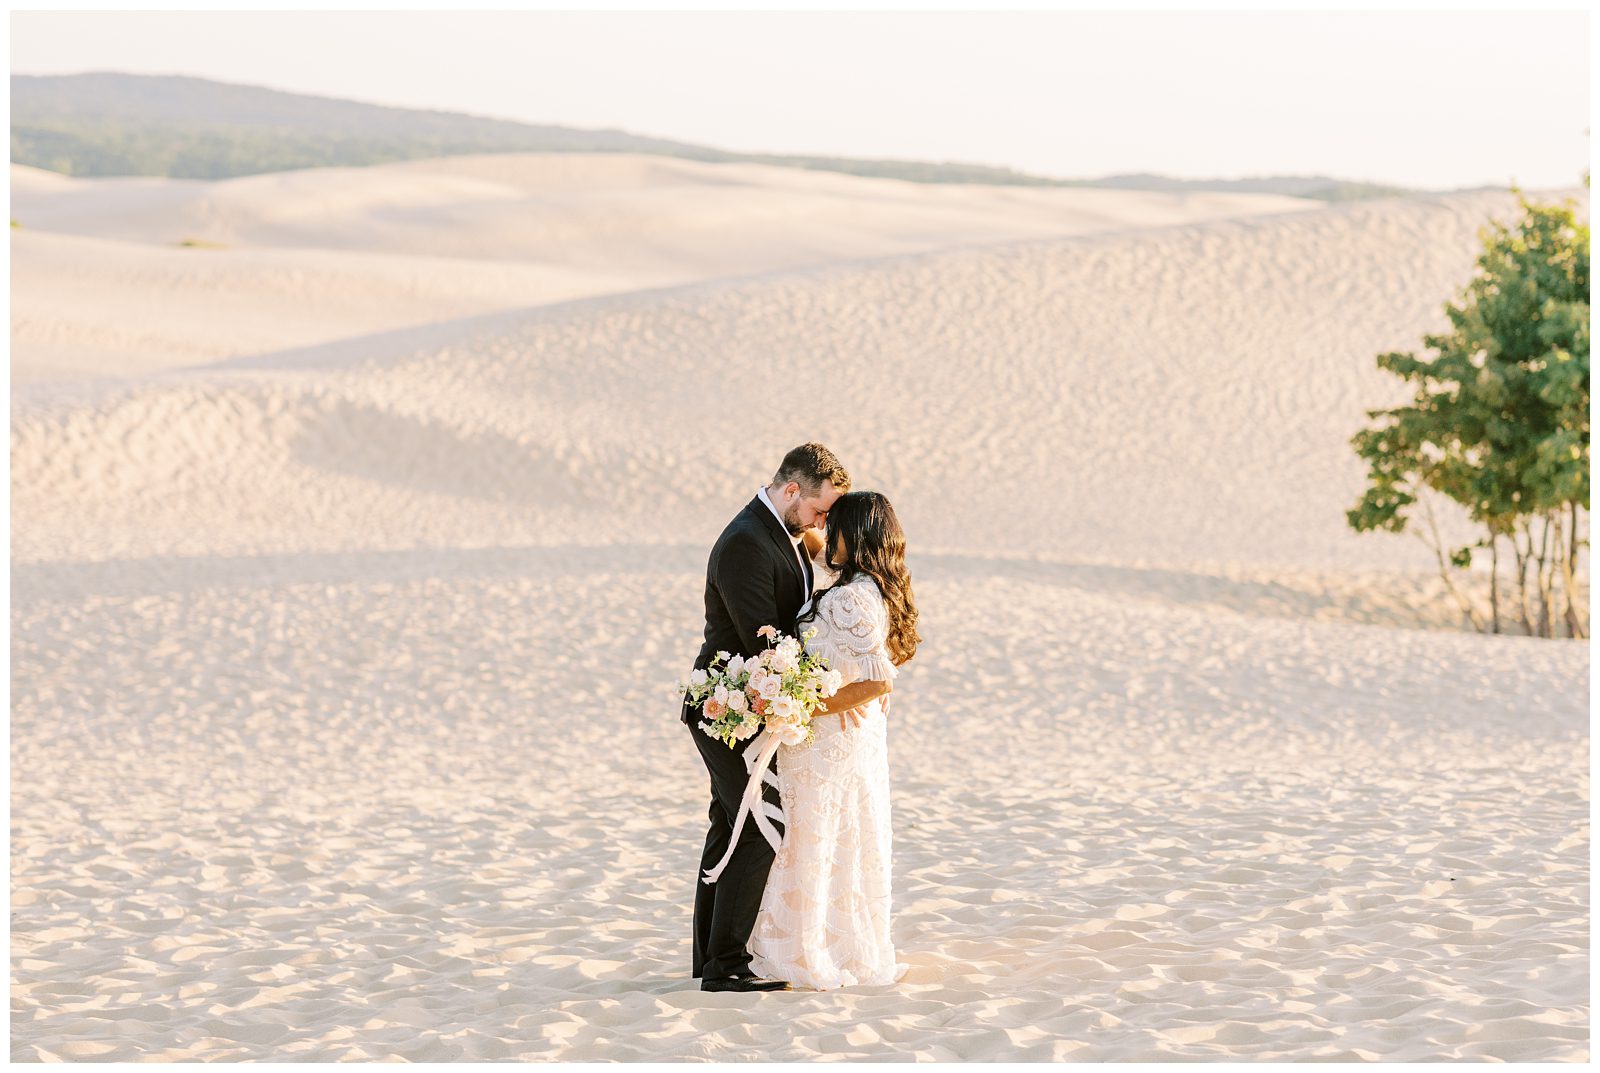 Silver Lake Sand Dunes Engagement Photos